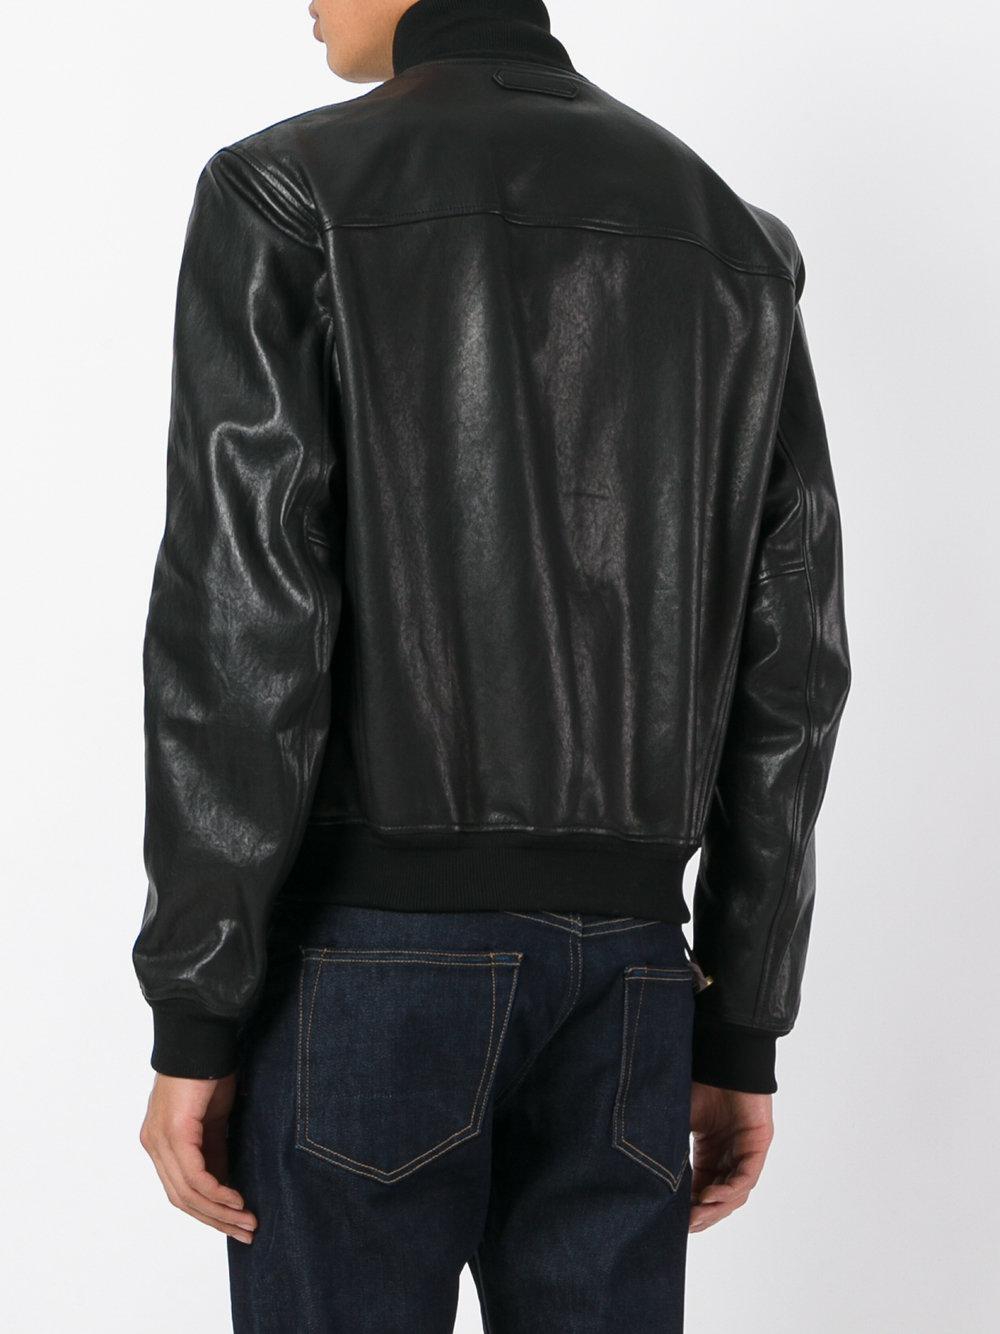 Lyst - Tom Ford Leather Bomber Jacket in Black for Men